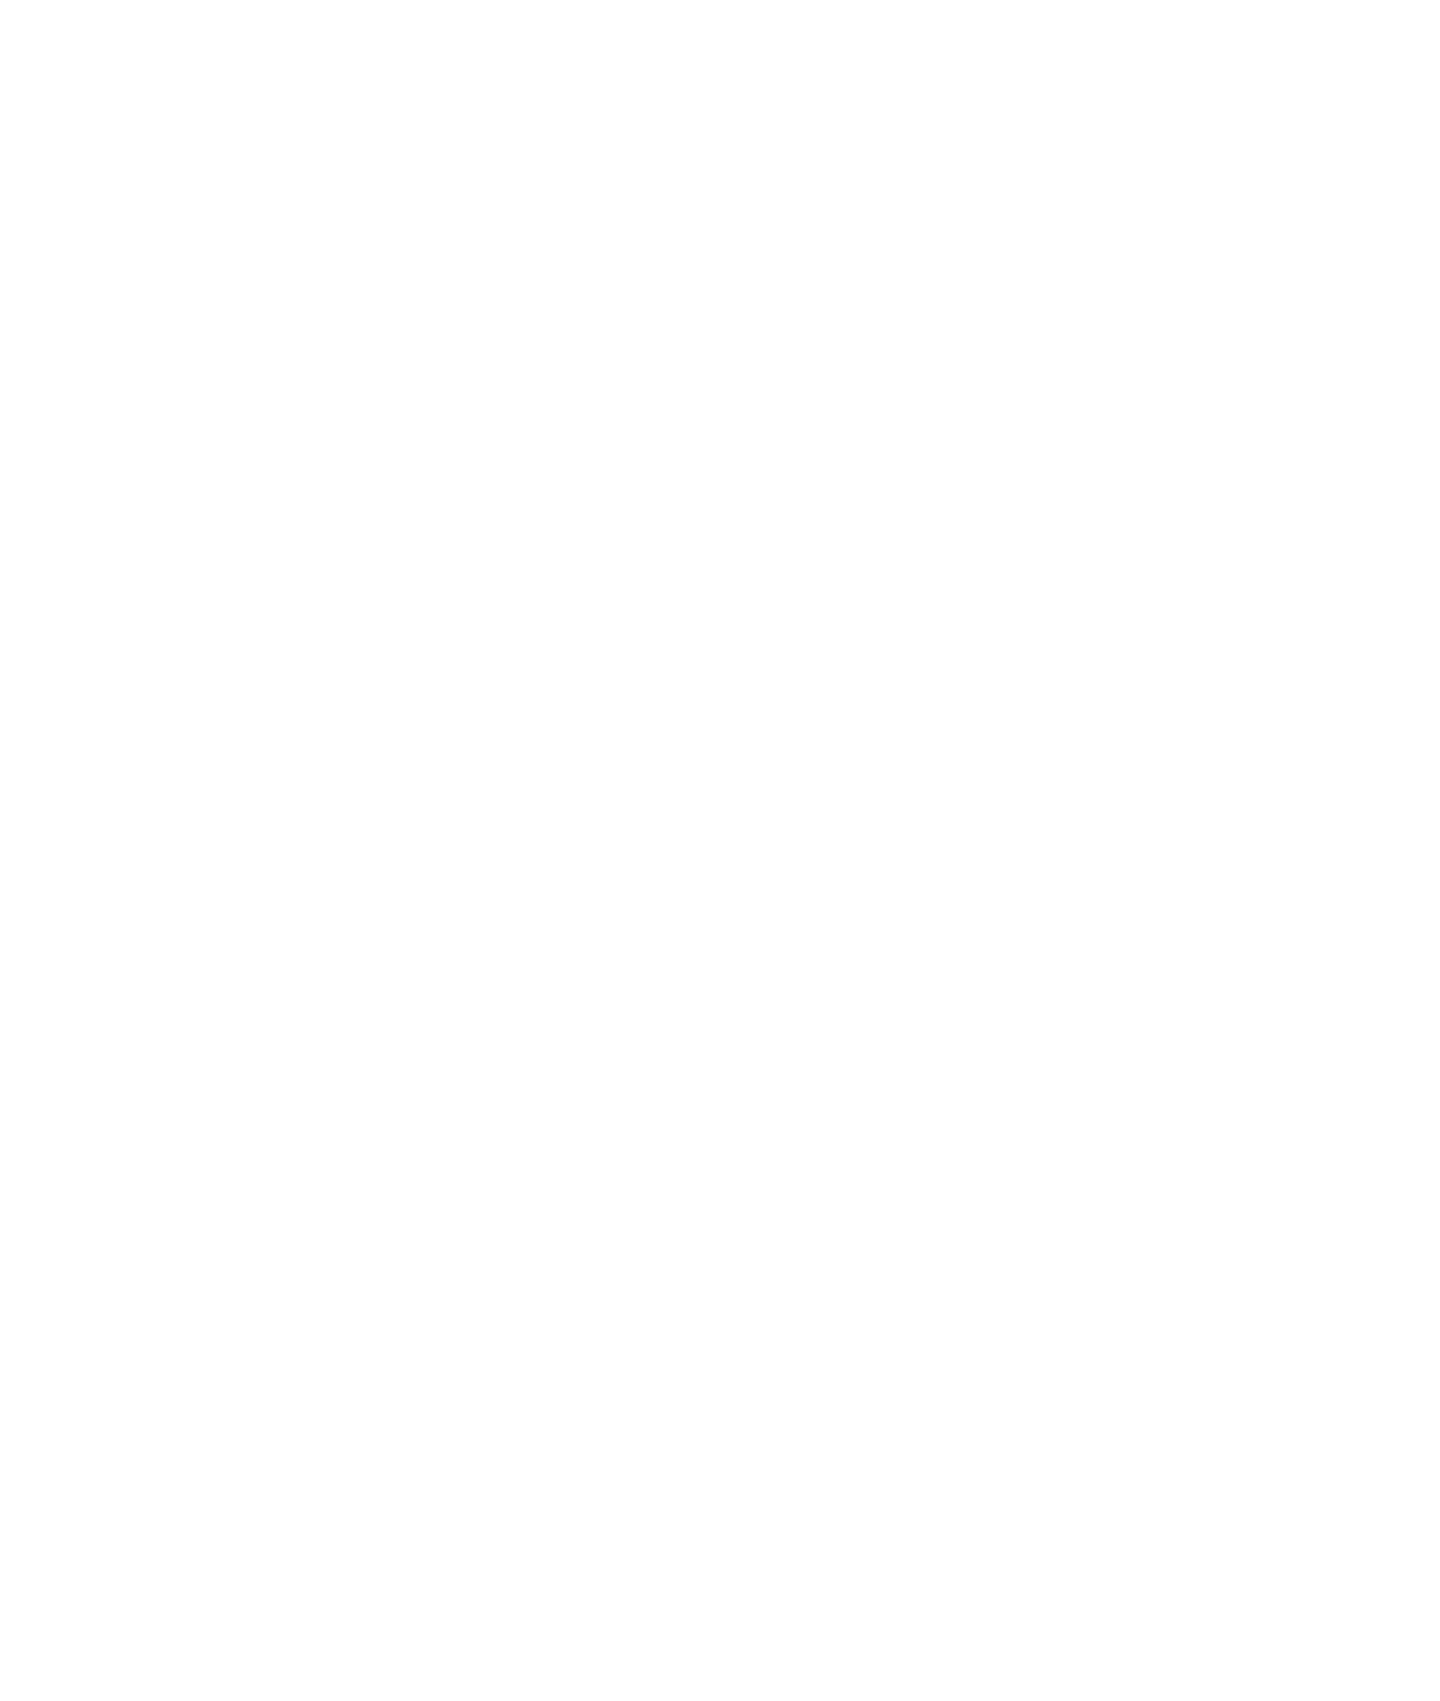 Apple logo in white